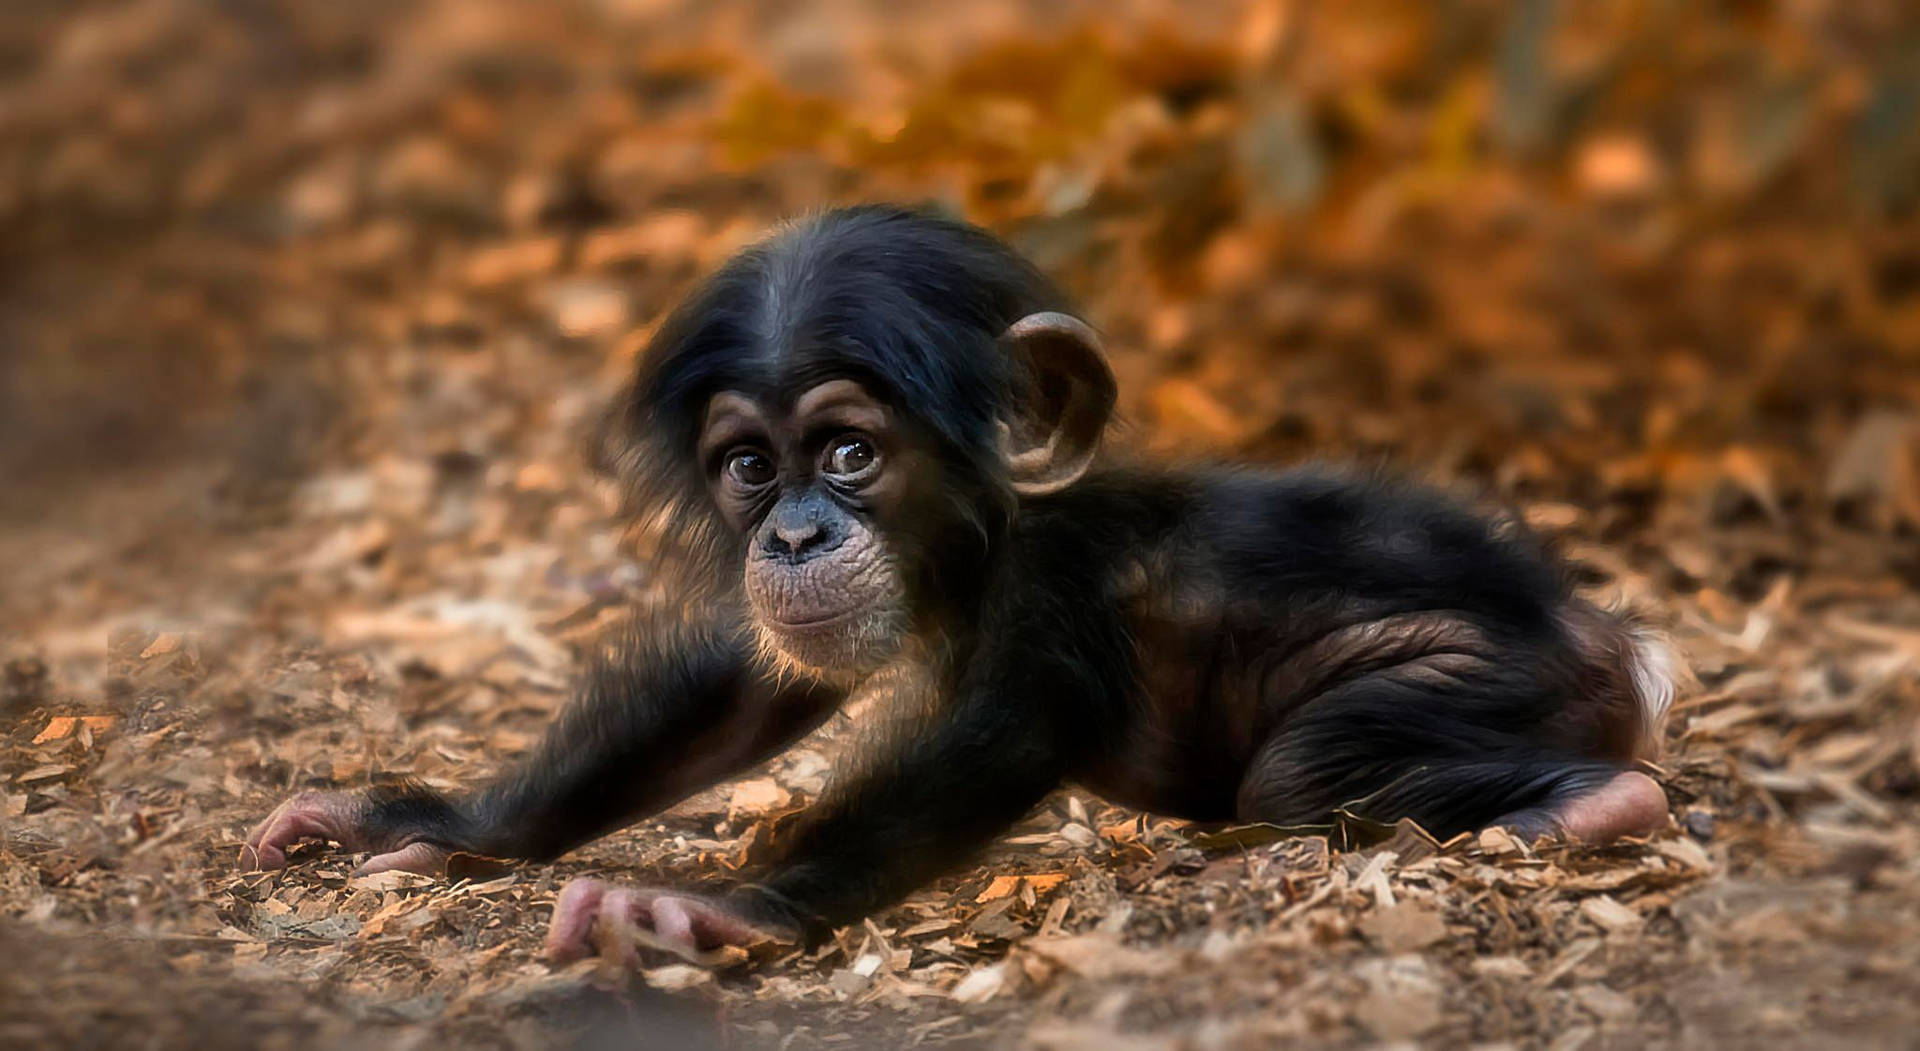 Cute Baby Chimpanzee Wallpaper